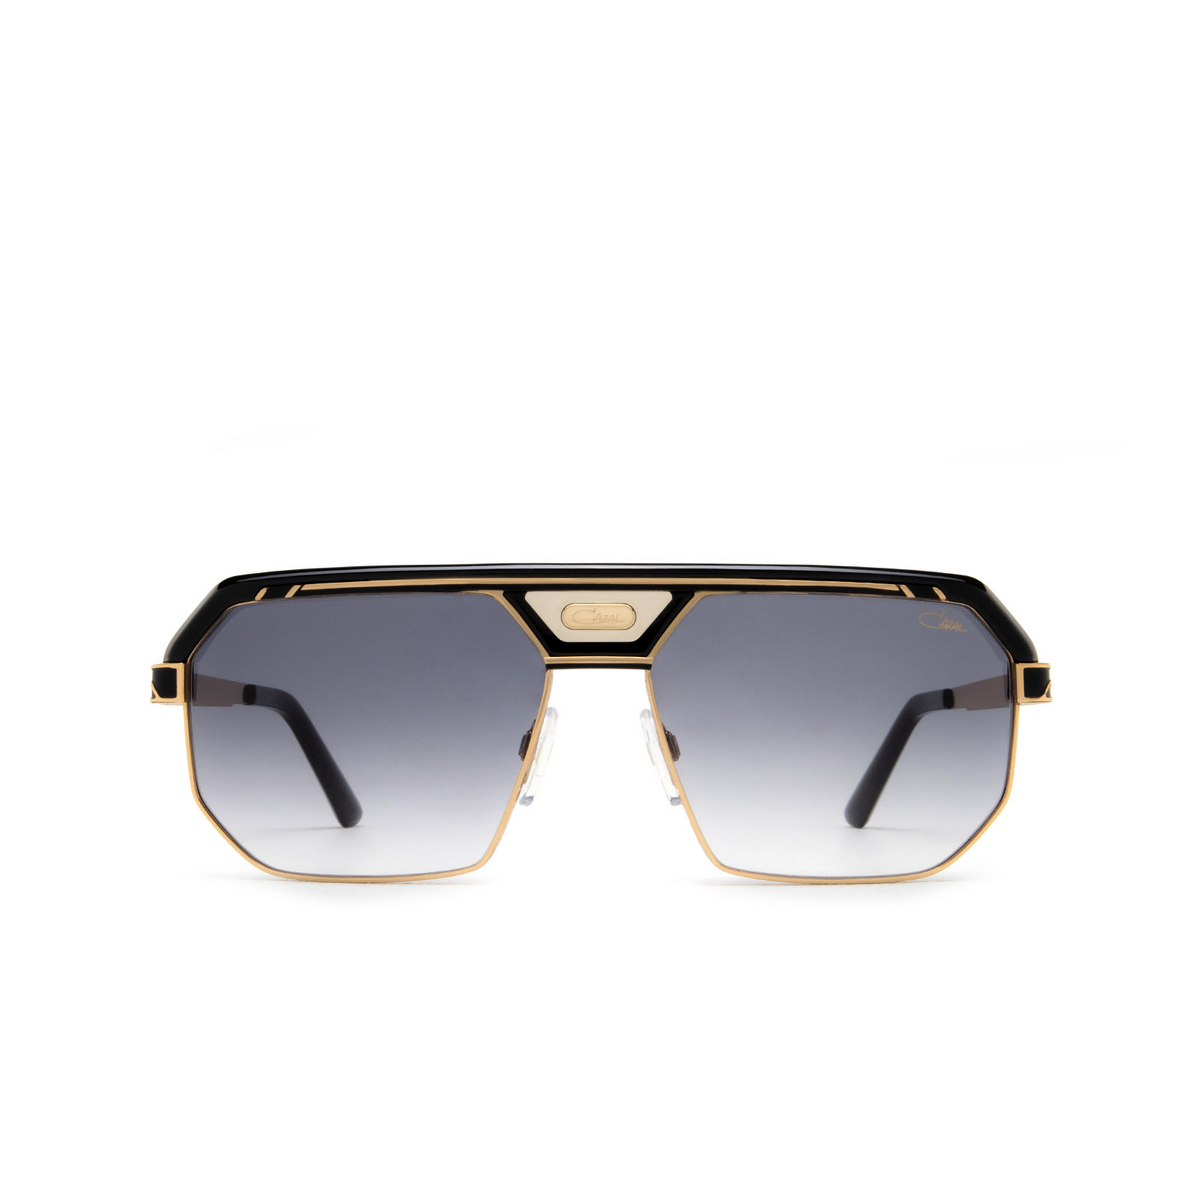 Cazal 676 Sunglasses 001 Black - Gold - front view